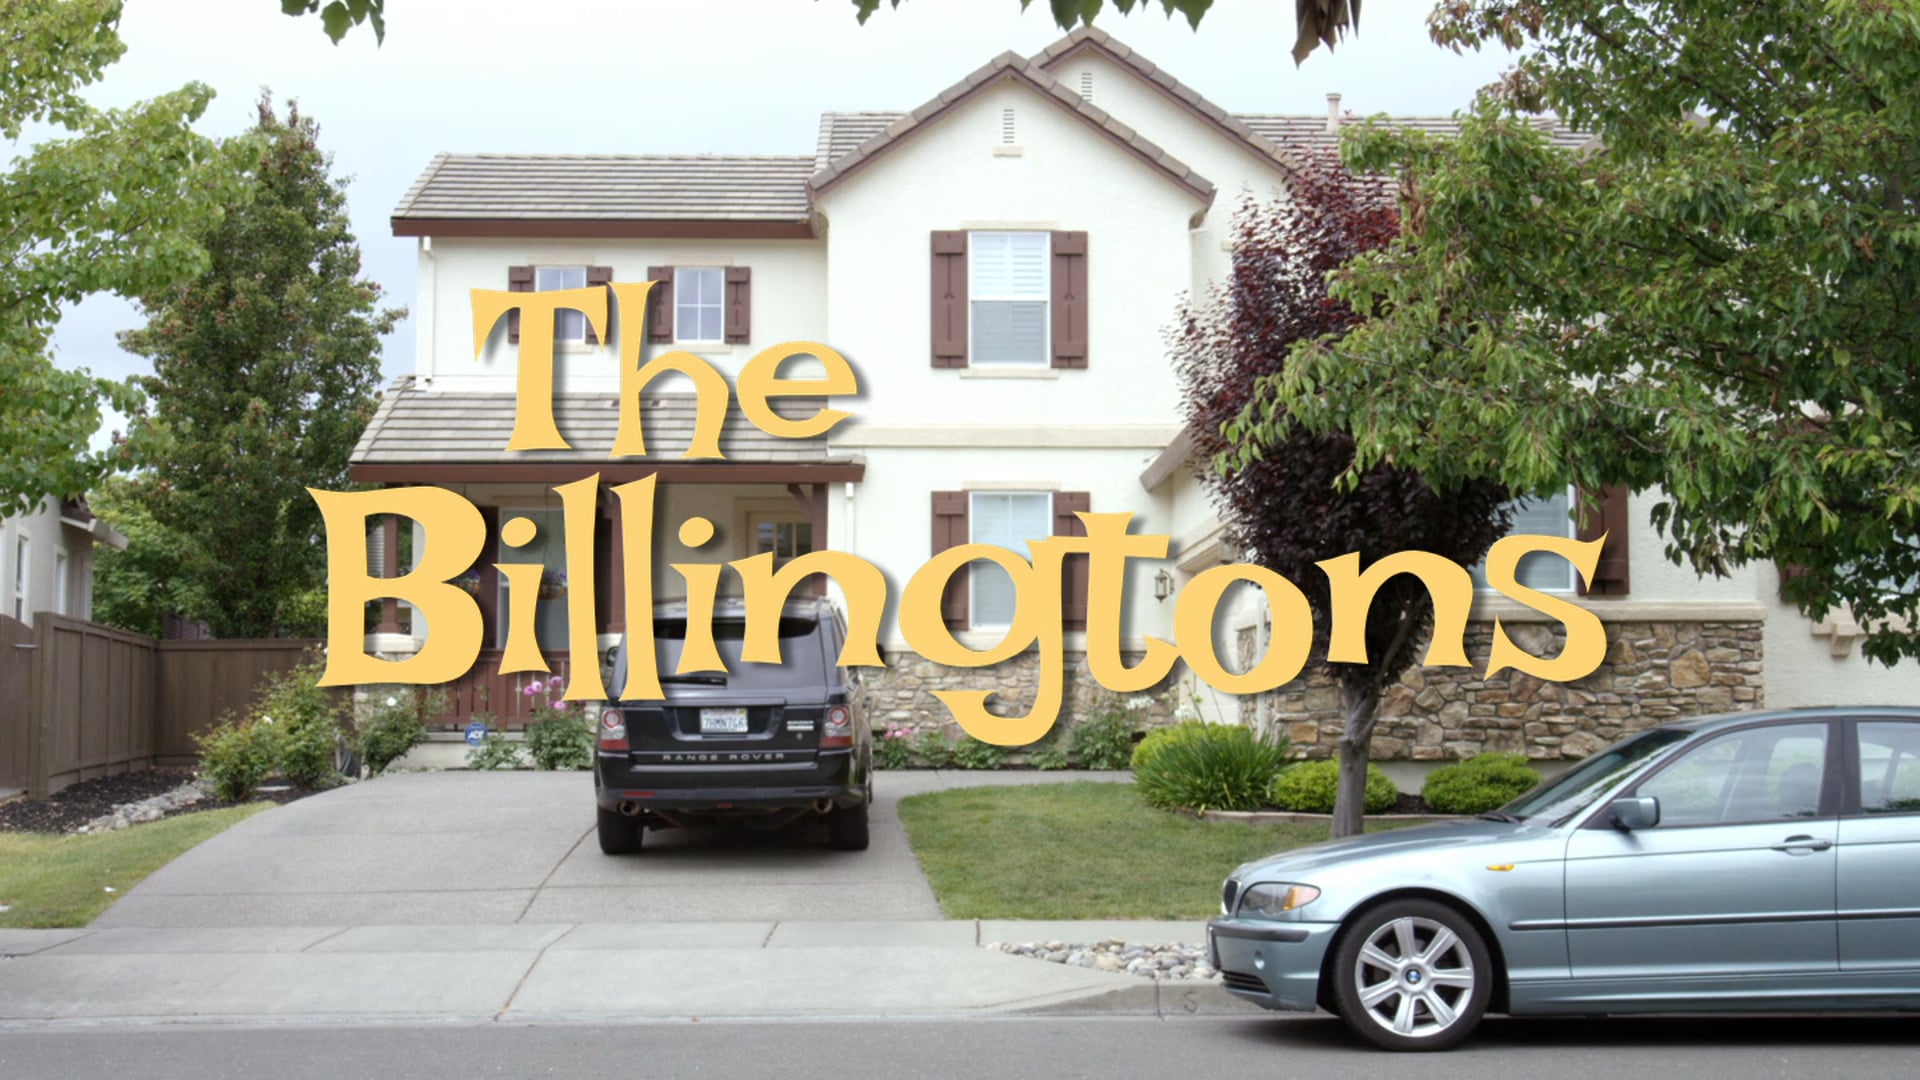 The Billingtons - Episode 2 [Short Film]